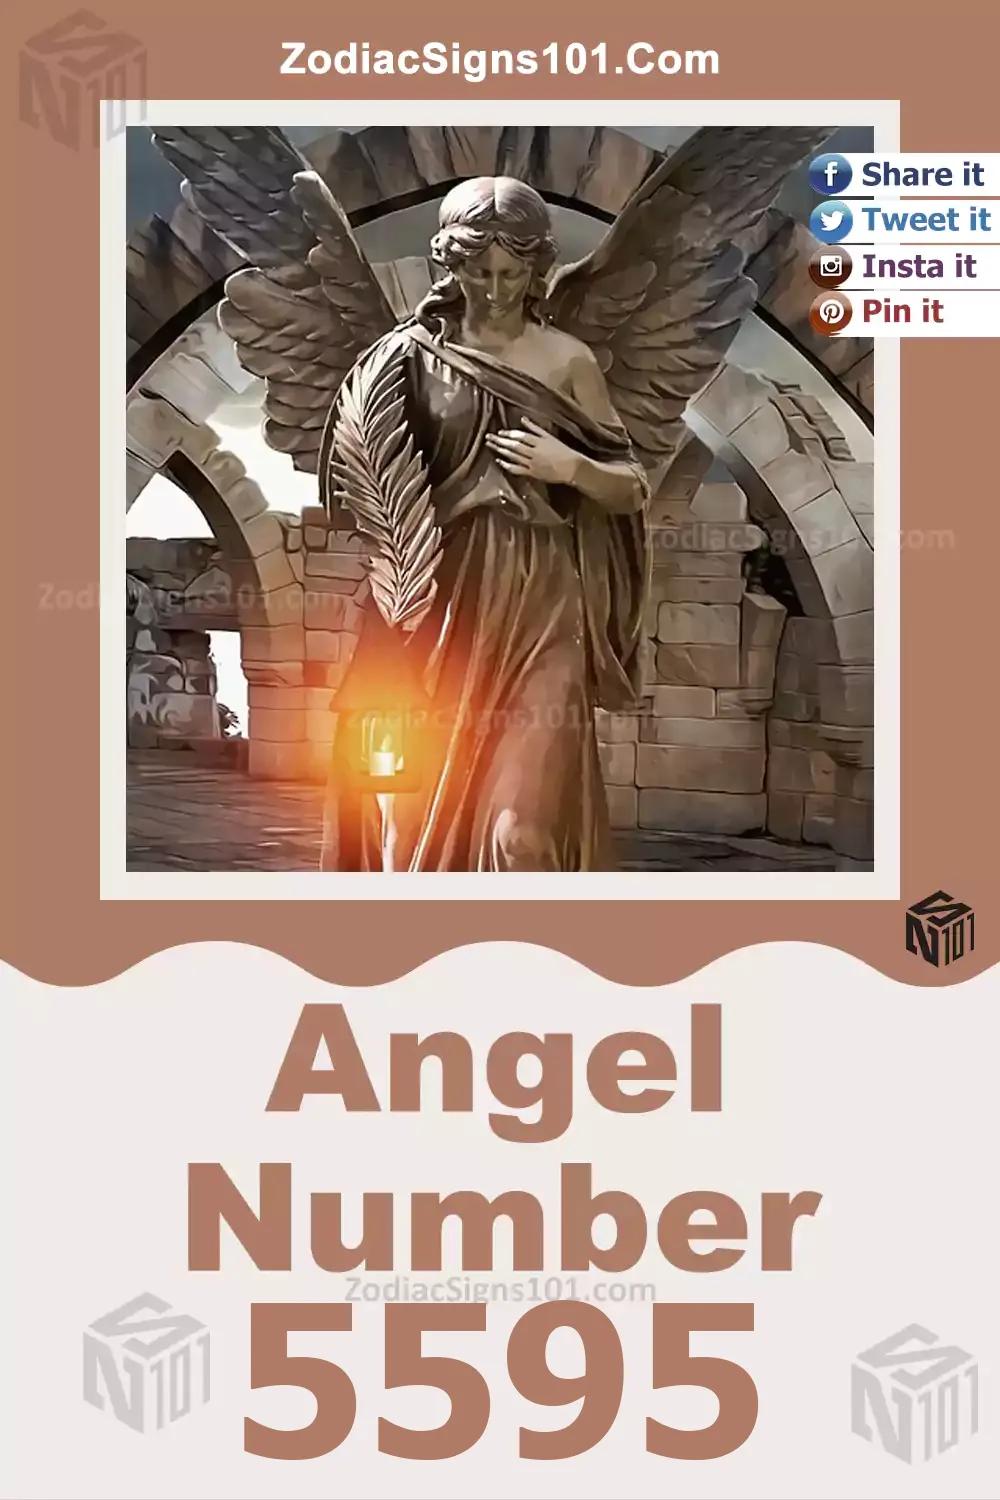 5595-Angel-Number-Meaning.jpg